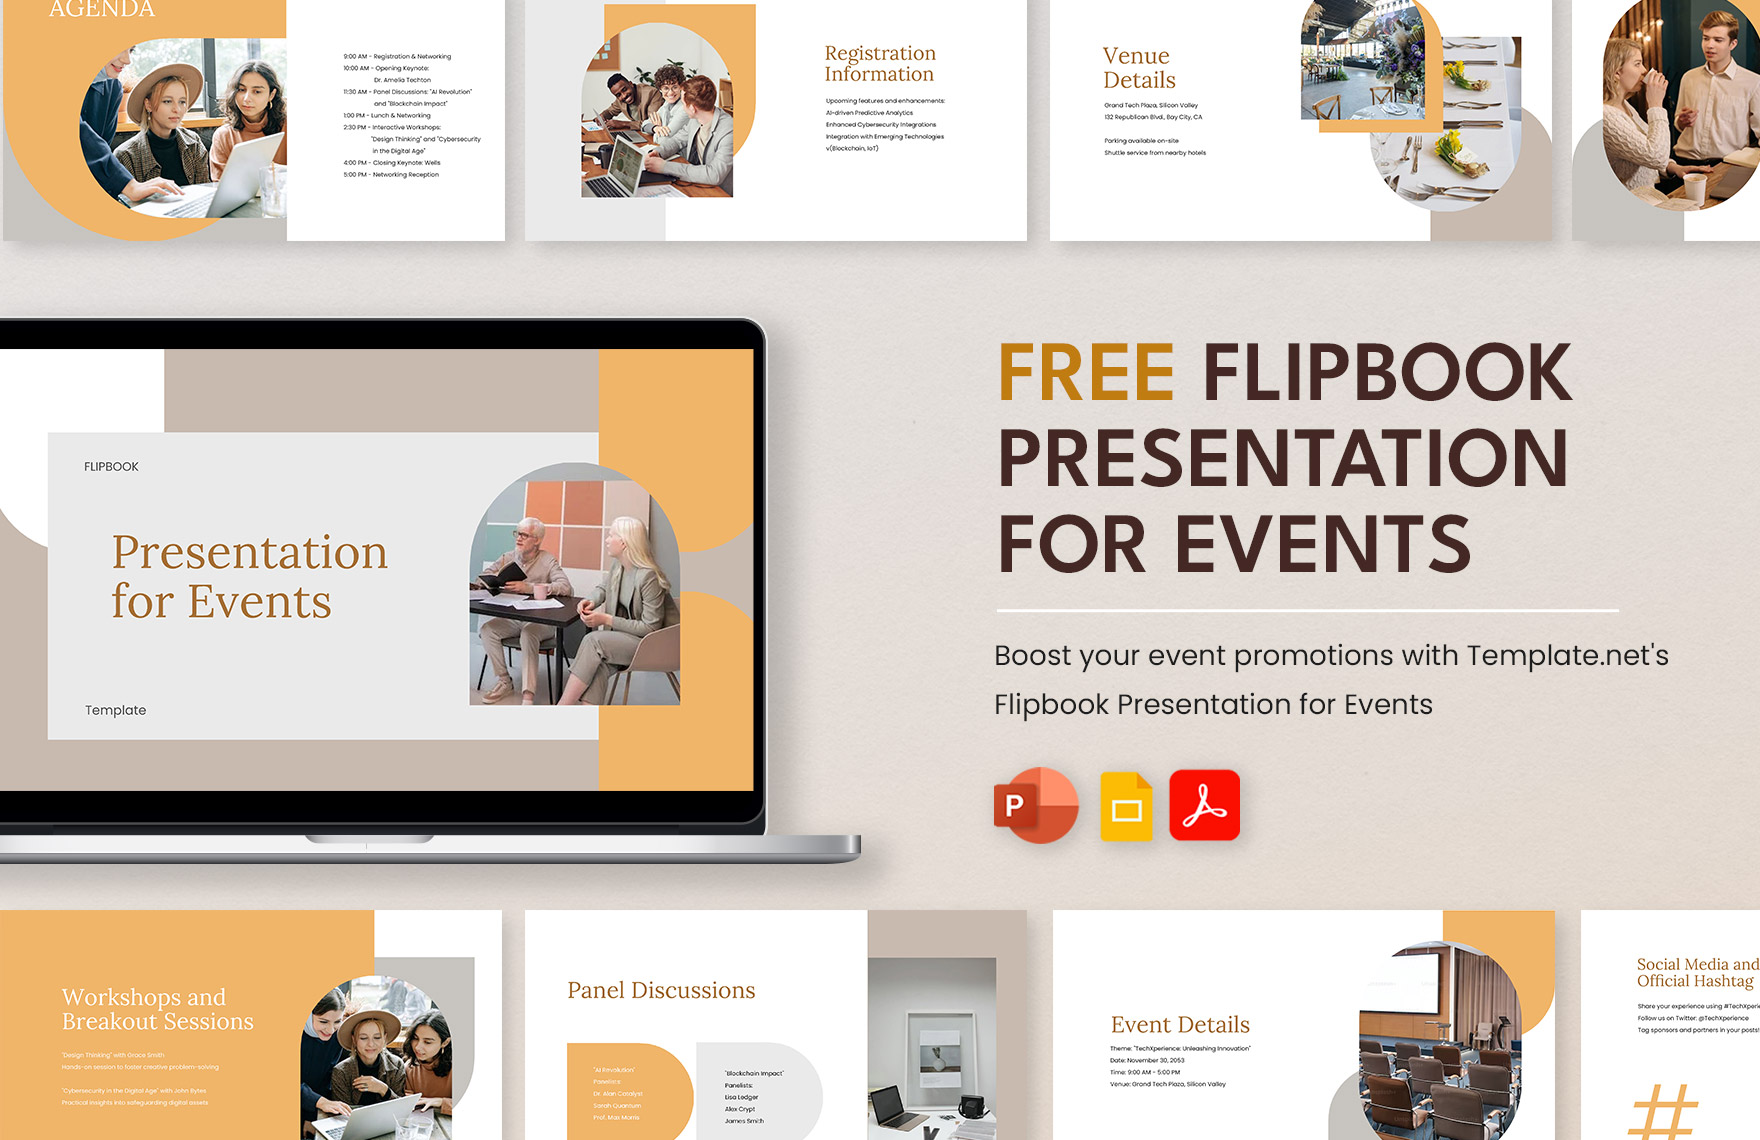 Flipbook Presentation for Events